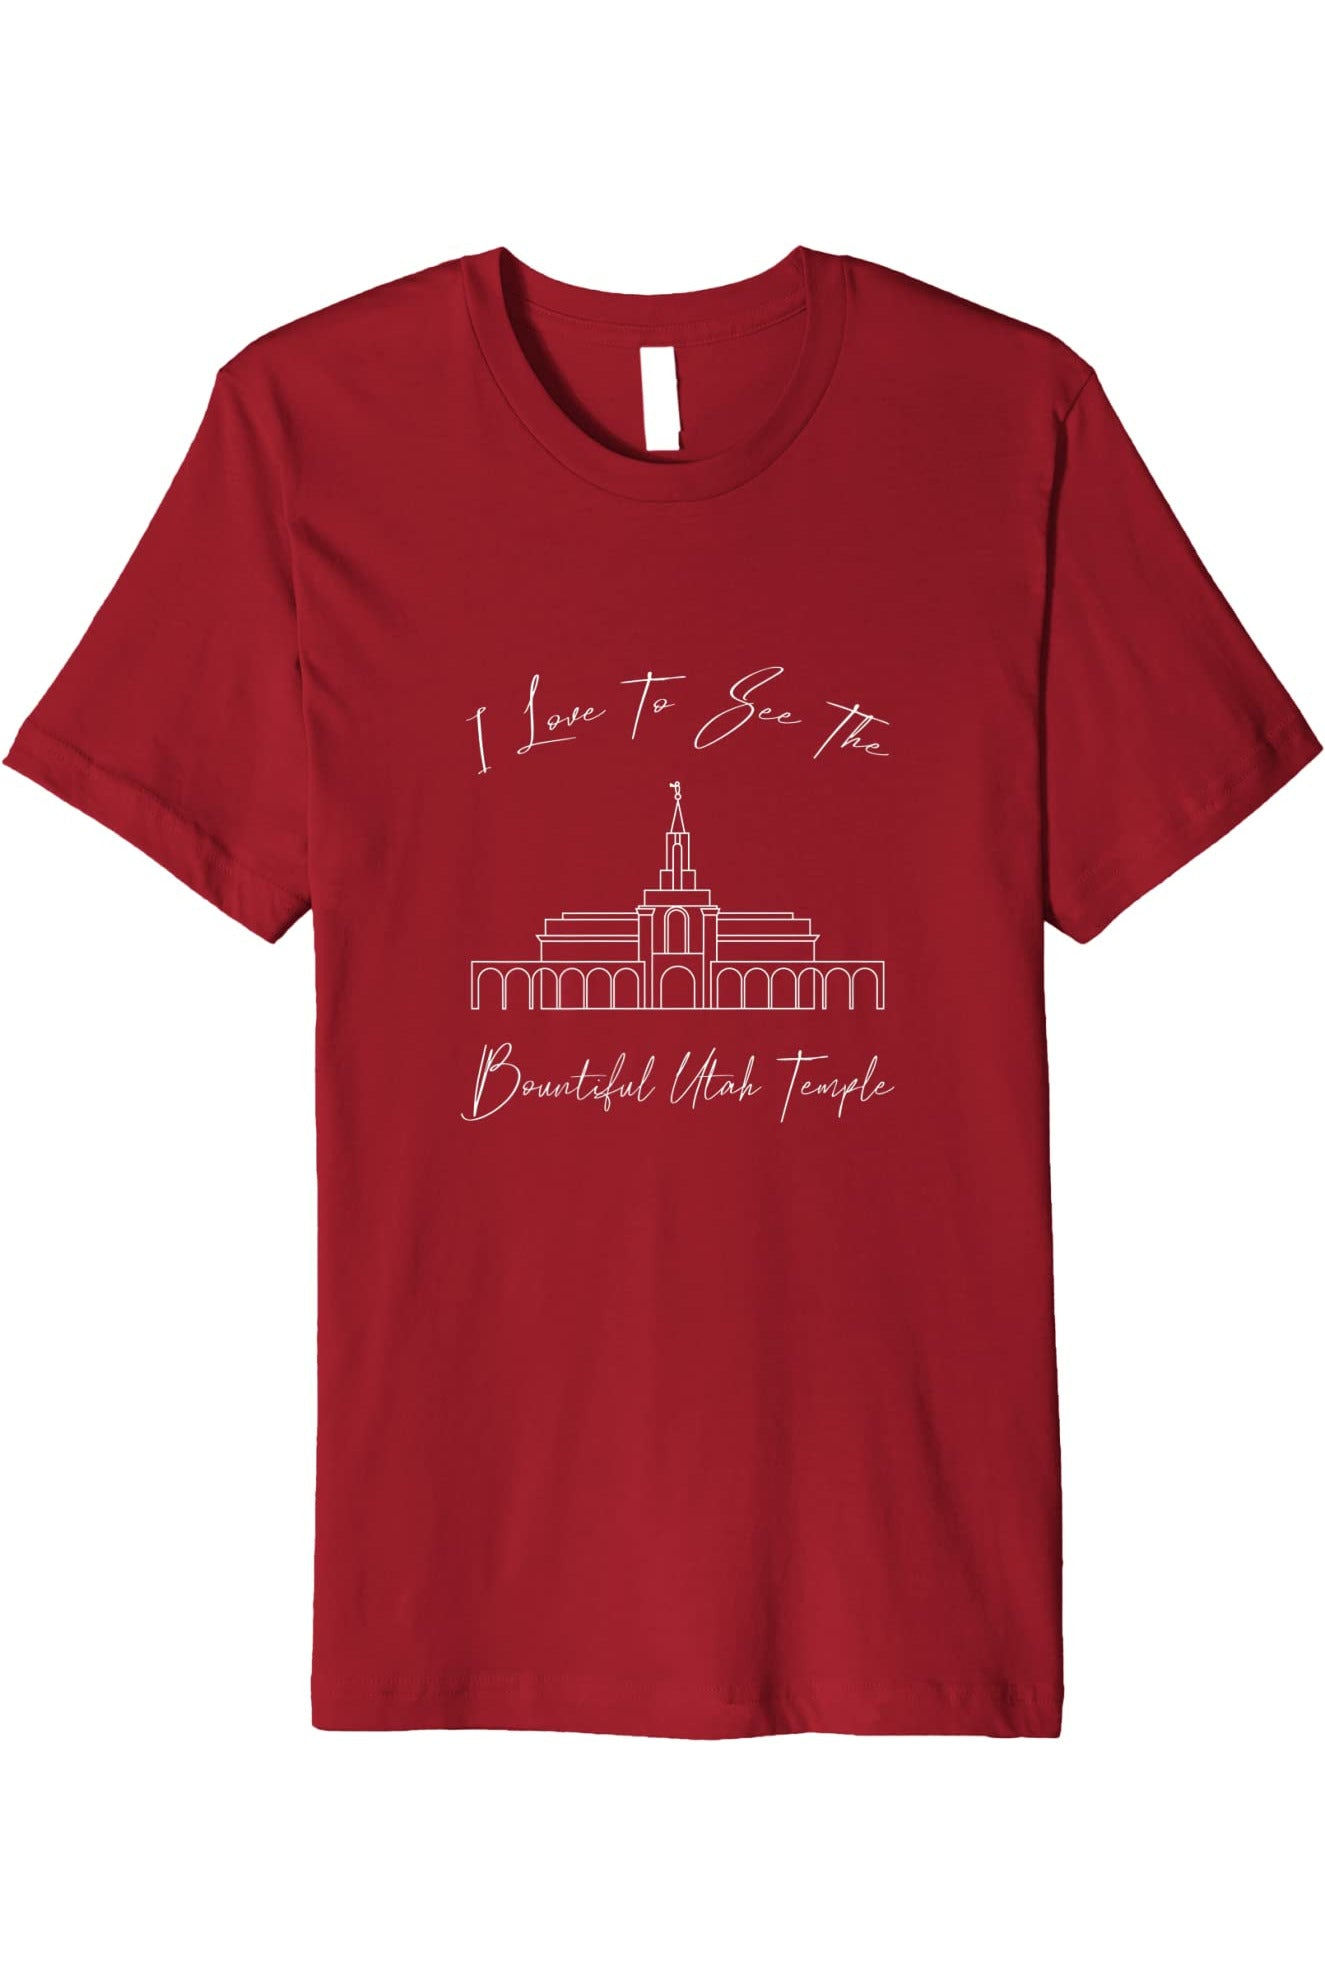 Bountiful Utah Temple T-Shirt - Premium - Calligraphy Style (English) US